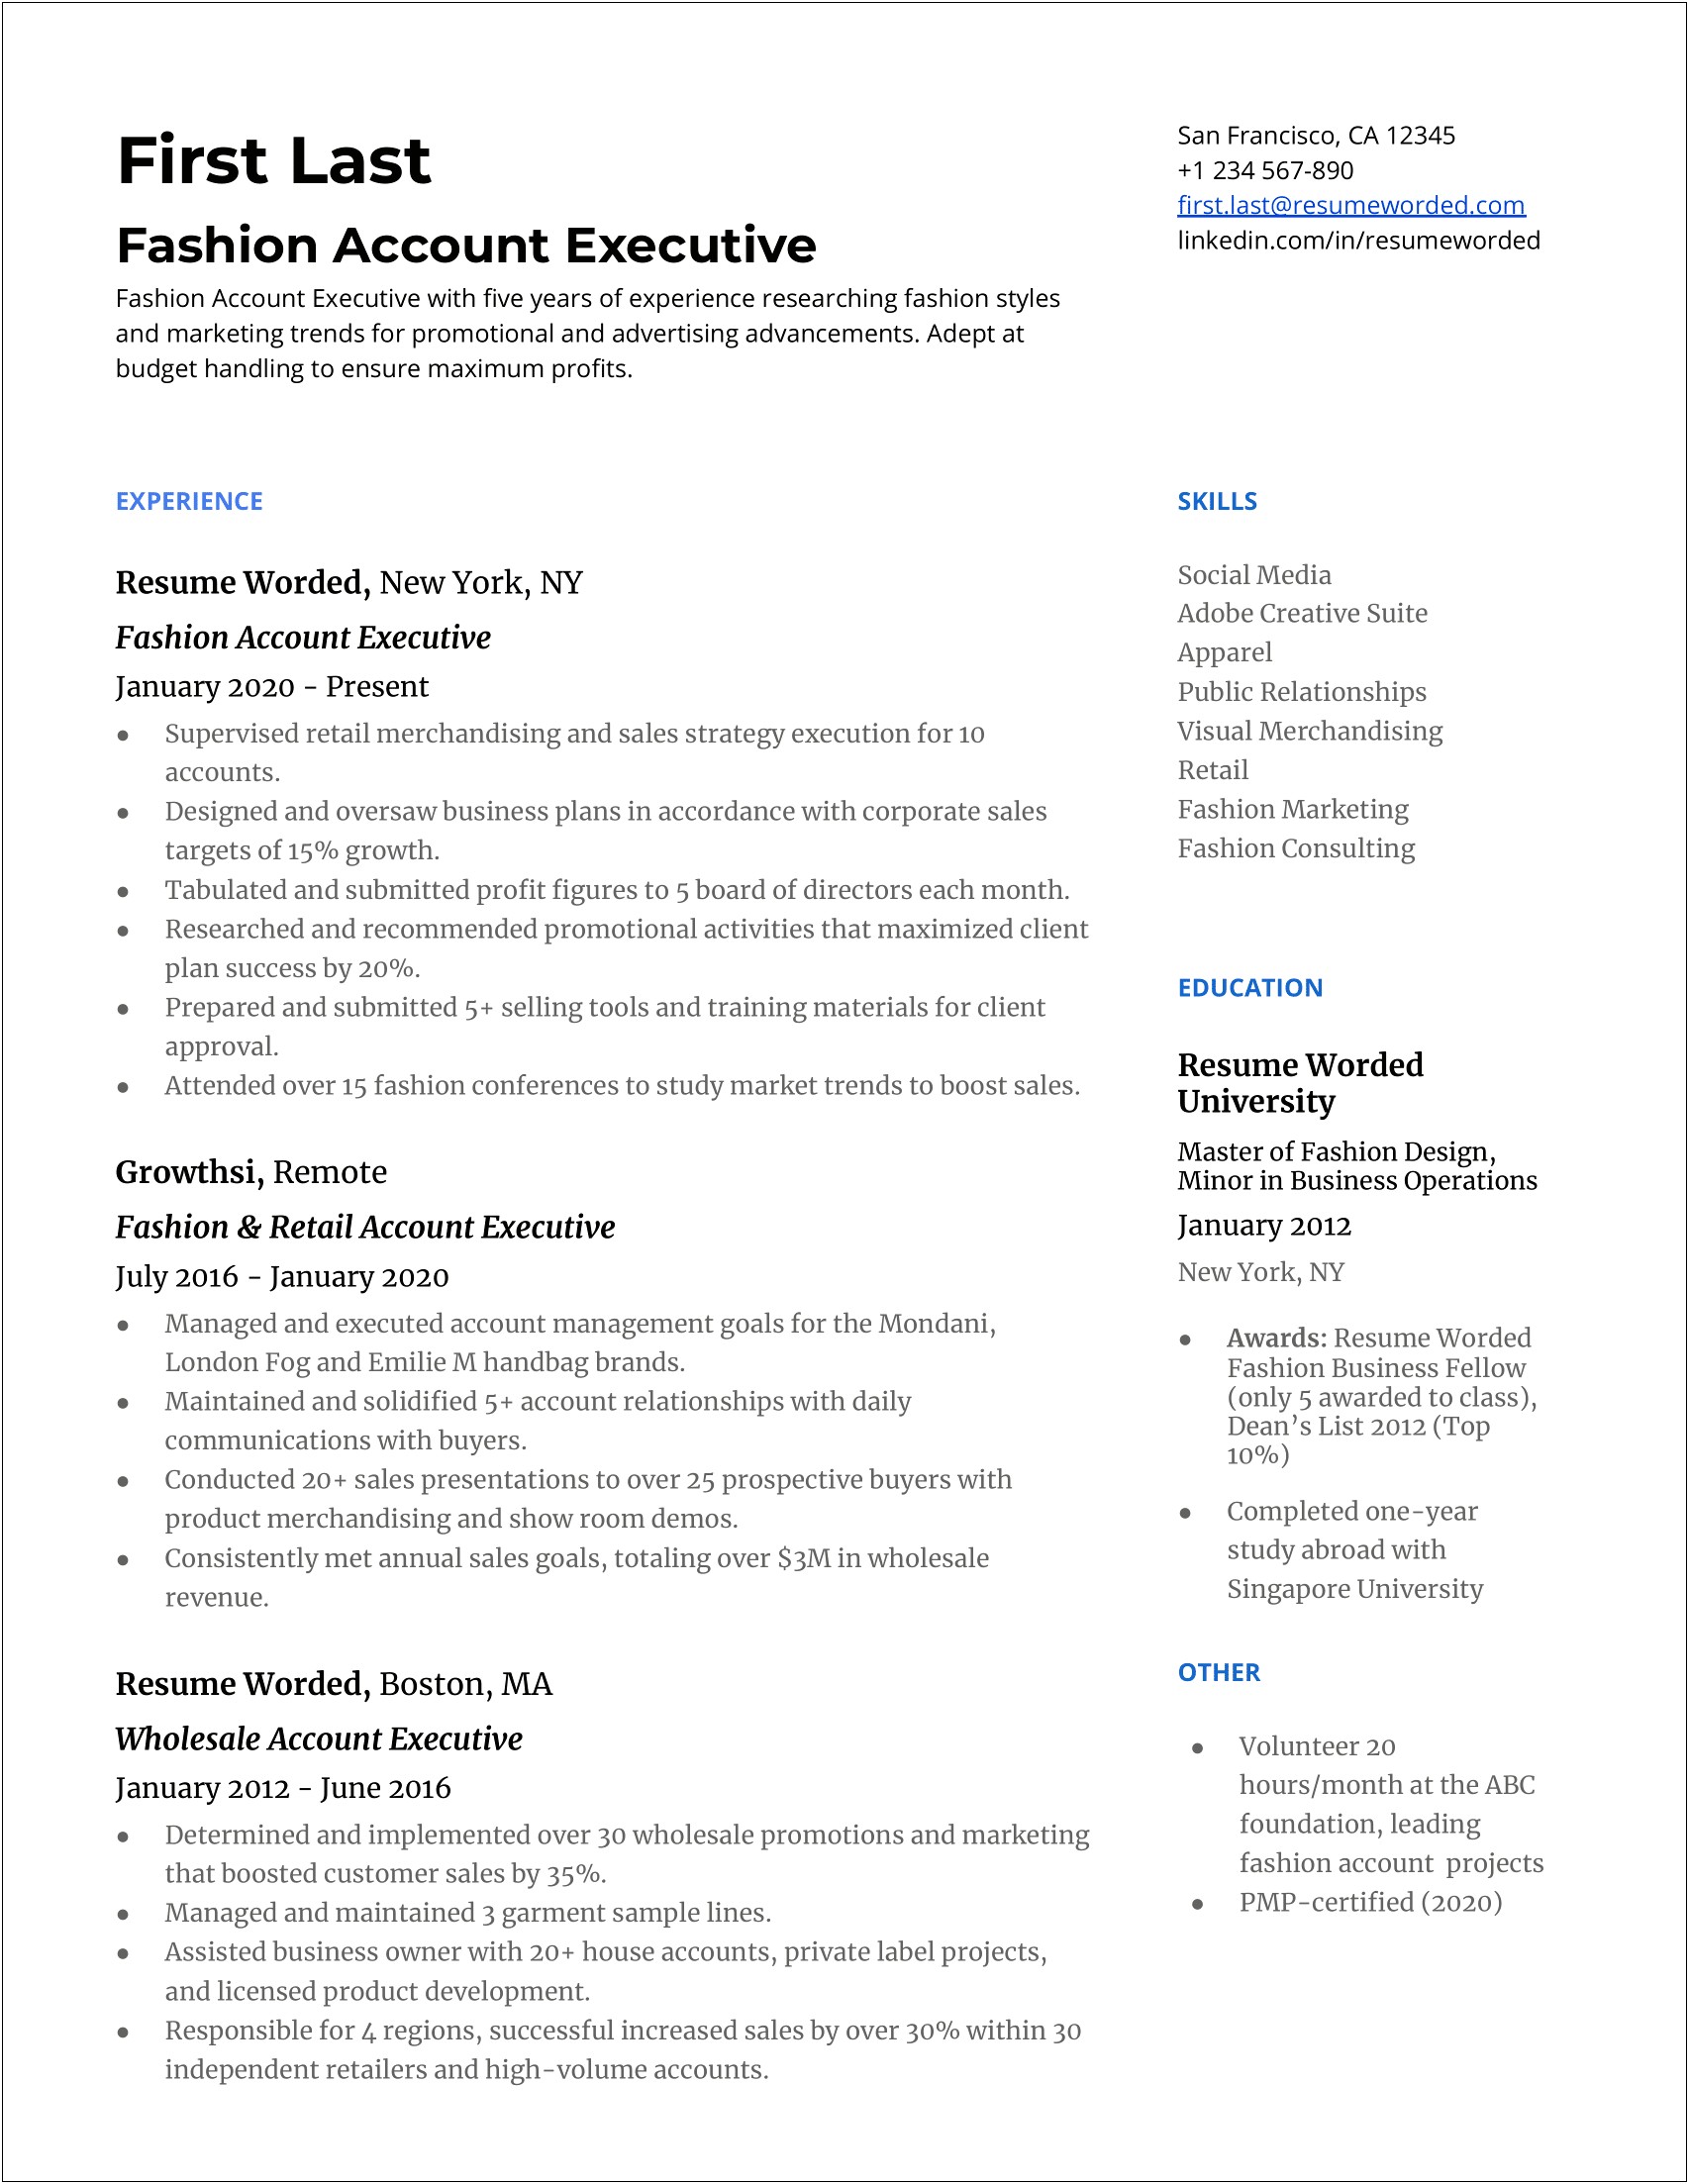 Resume Ok For Account Executive Sample